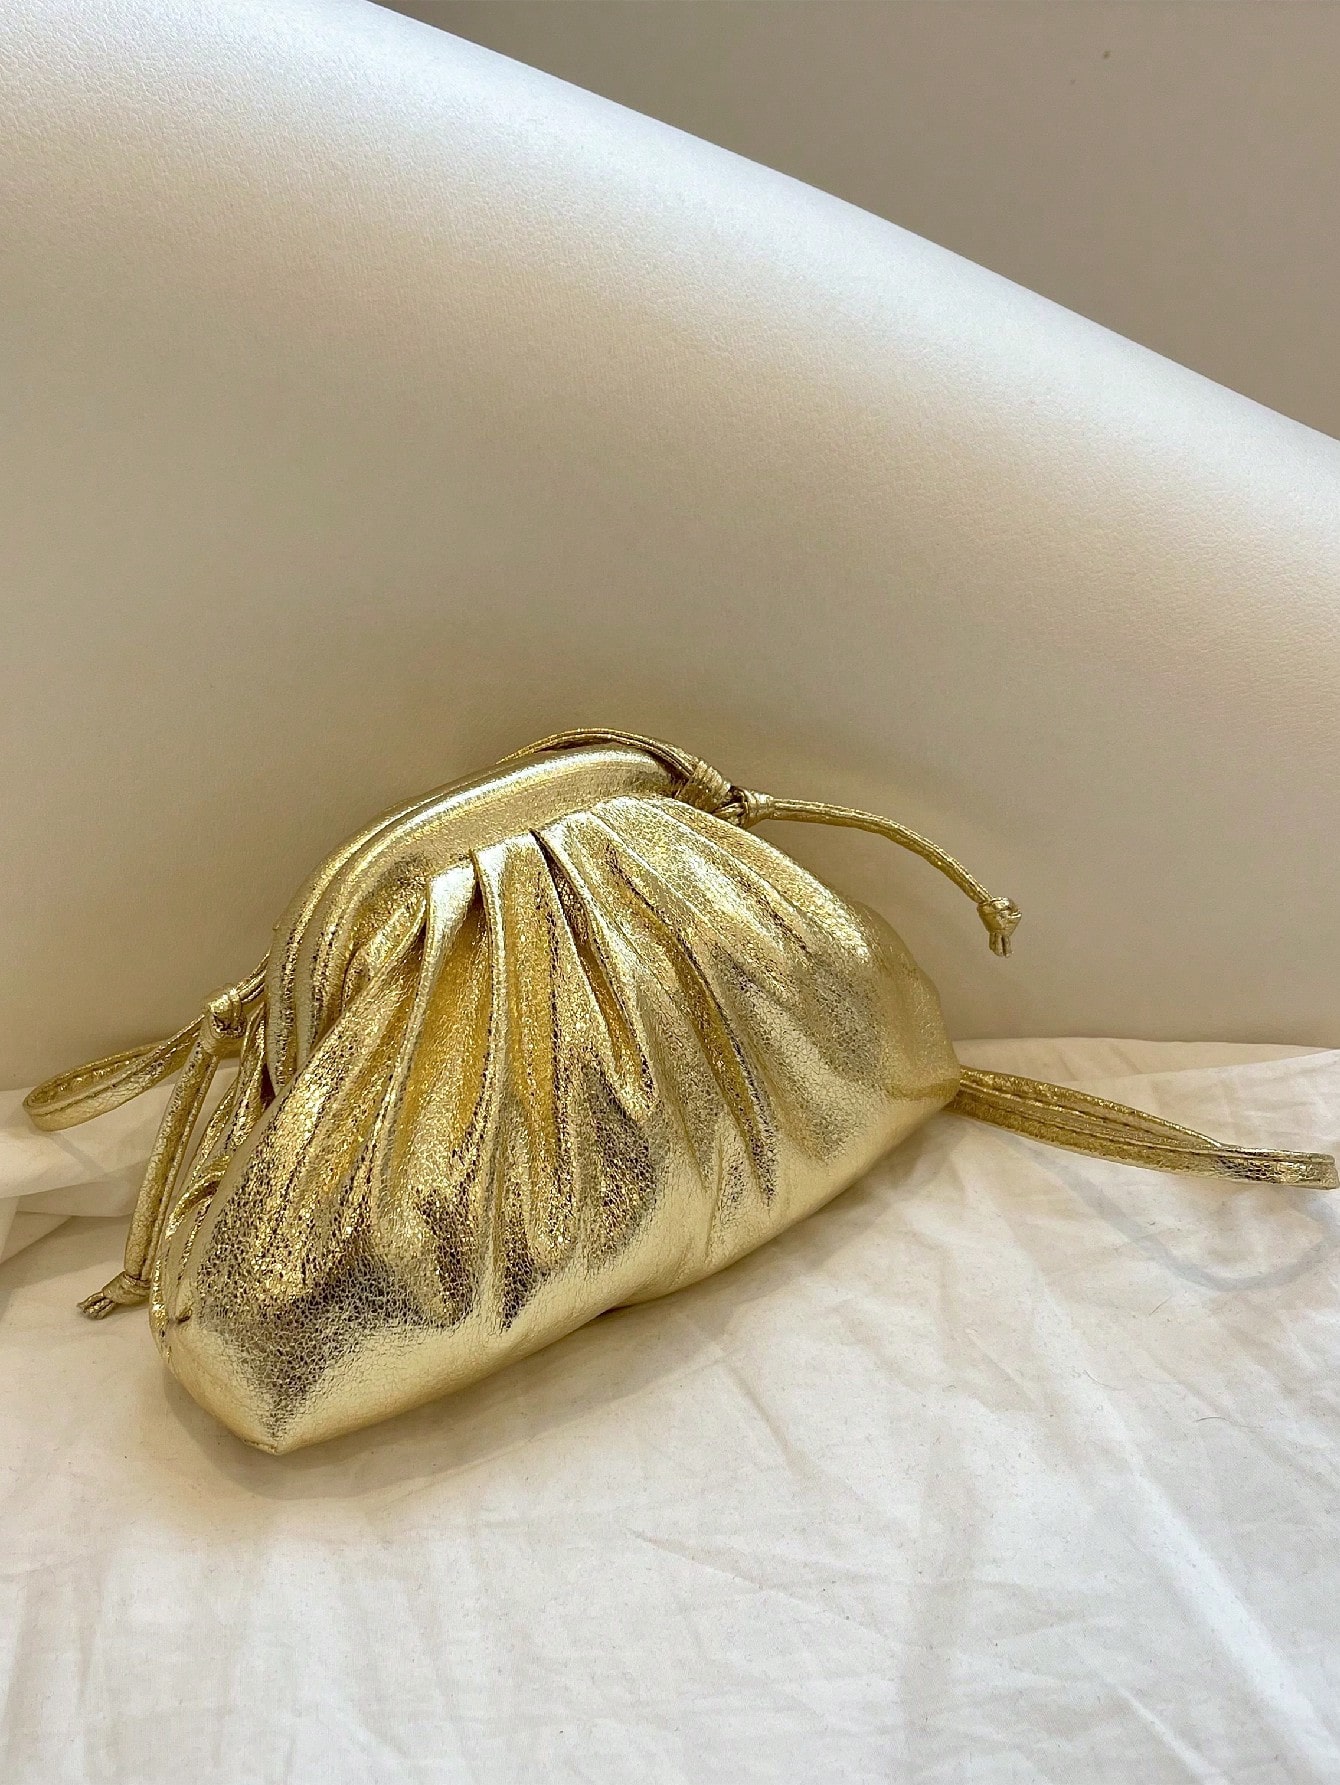 Мини-сумка со складками Ярко-розовый металлик Полиуретан в стиле фанк, золото